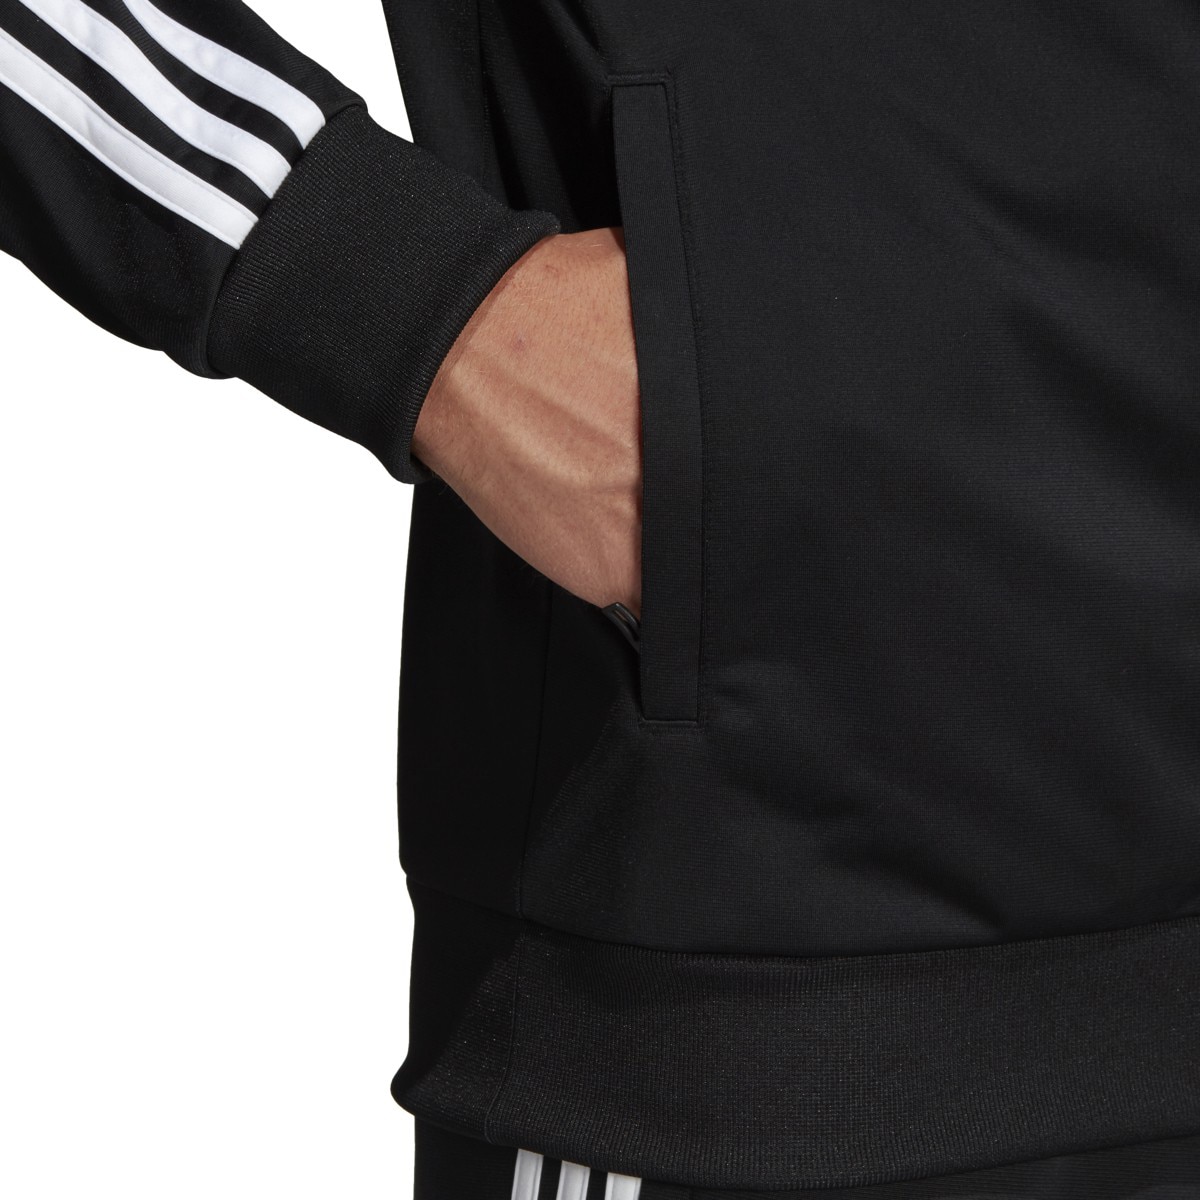 Adidas Essentials 3 Stripe Men's Track Jacket DQ3070 - Black, White - image 2 of 8